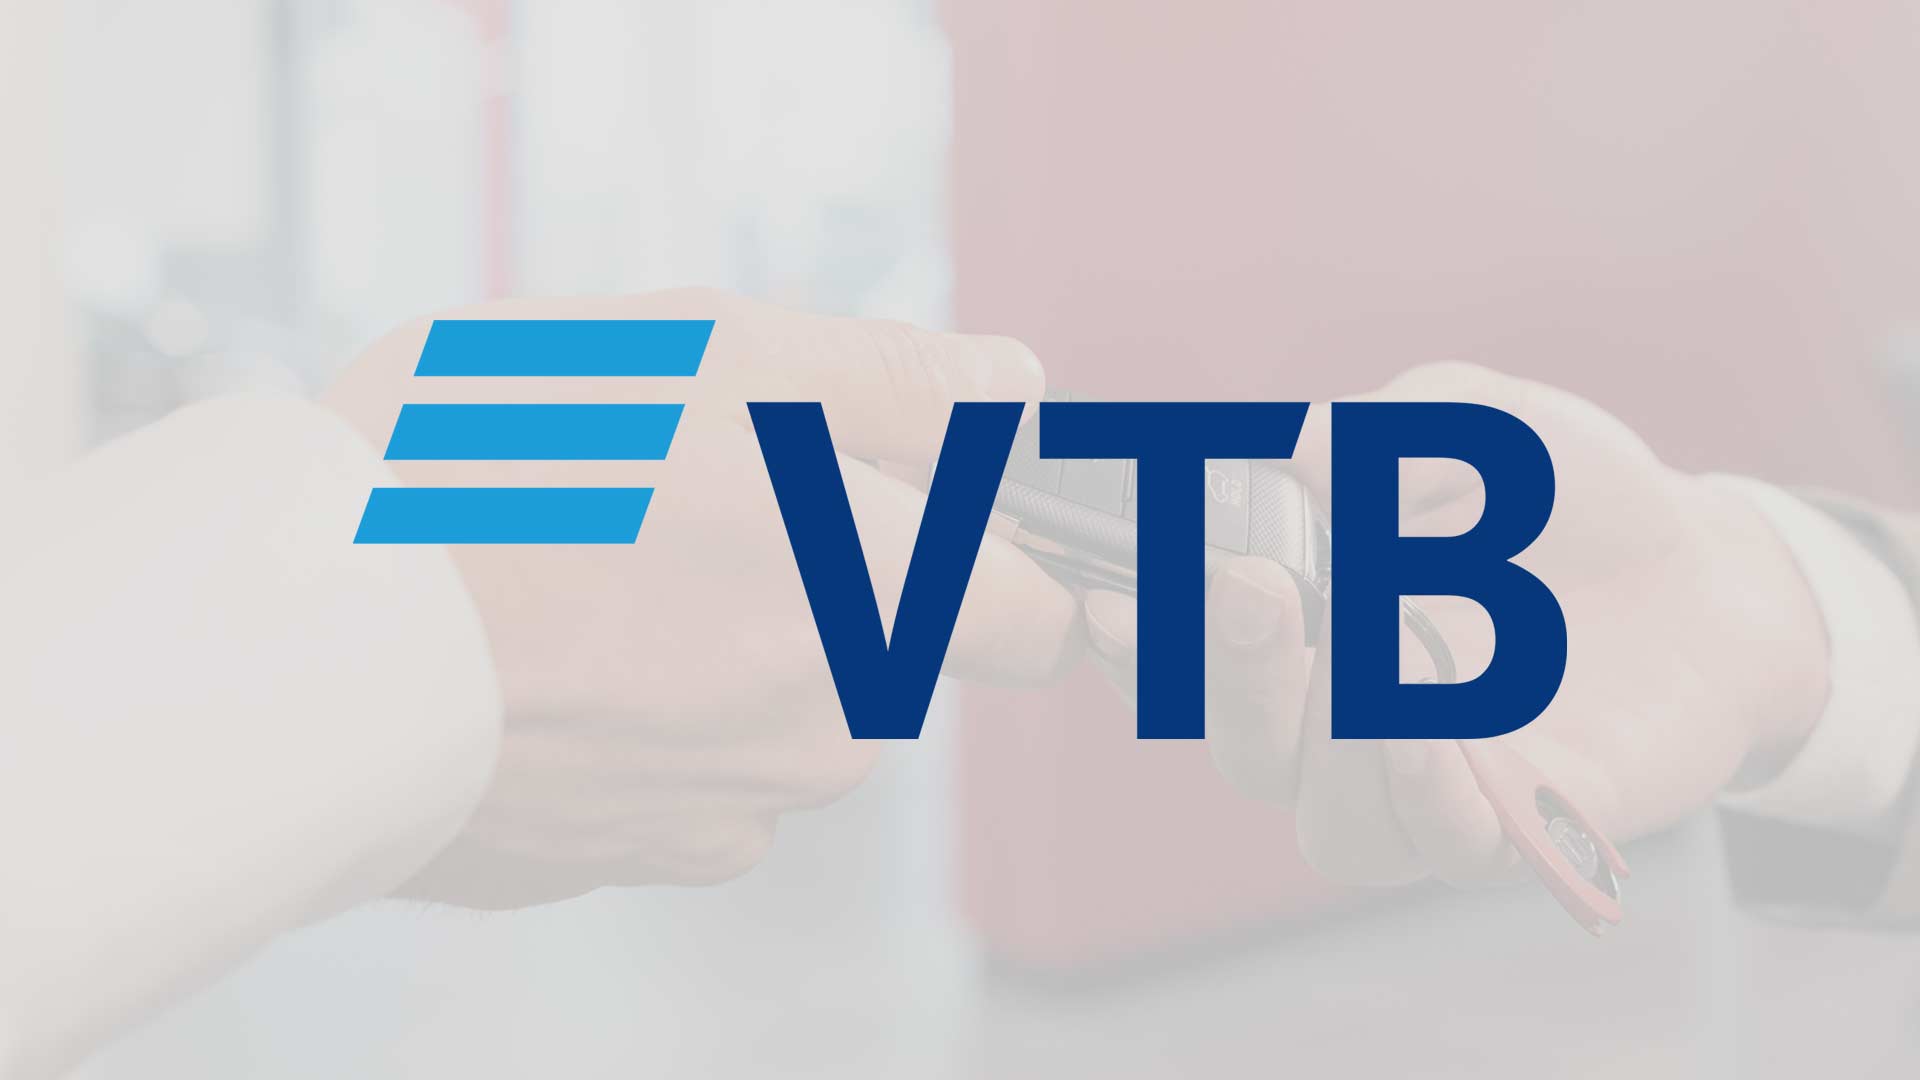 VTB bank